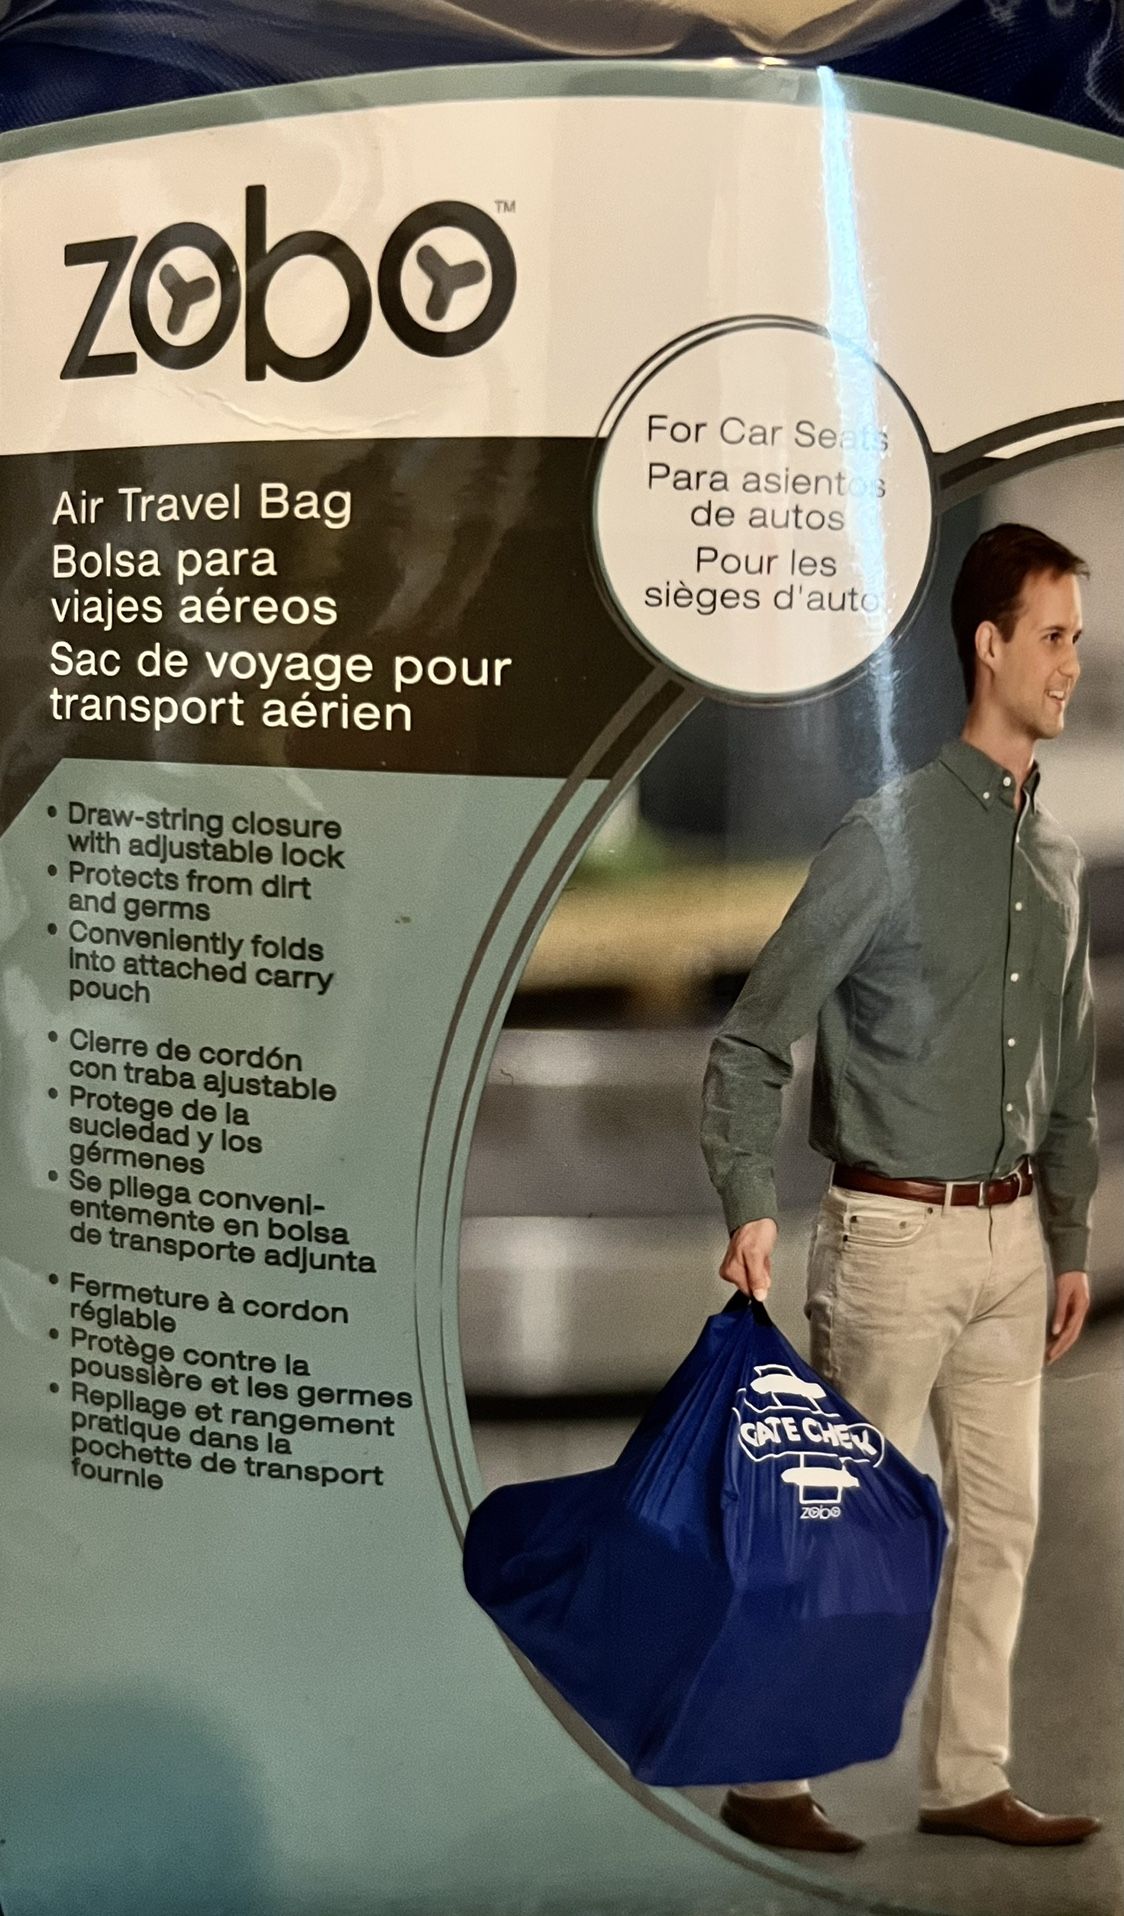 Zobo Air Travel Bag For Car Seats